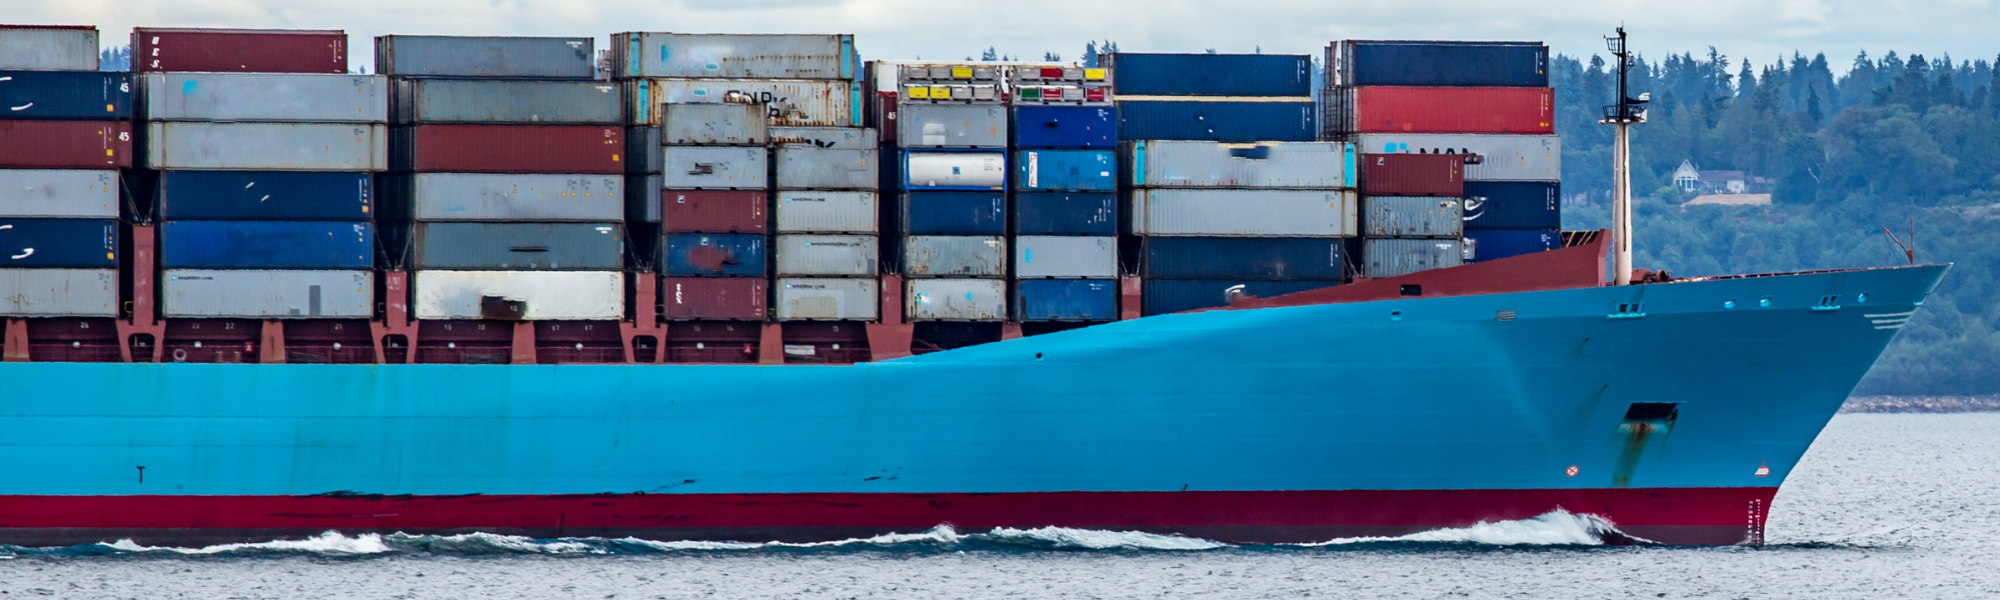 Ship transporting goods for trade